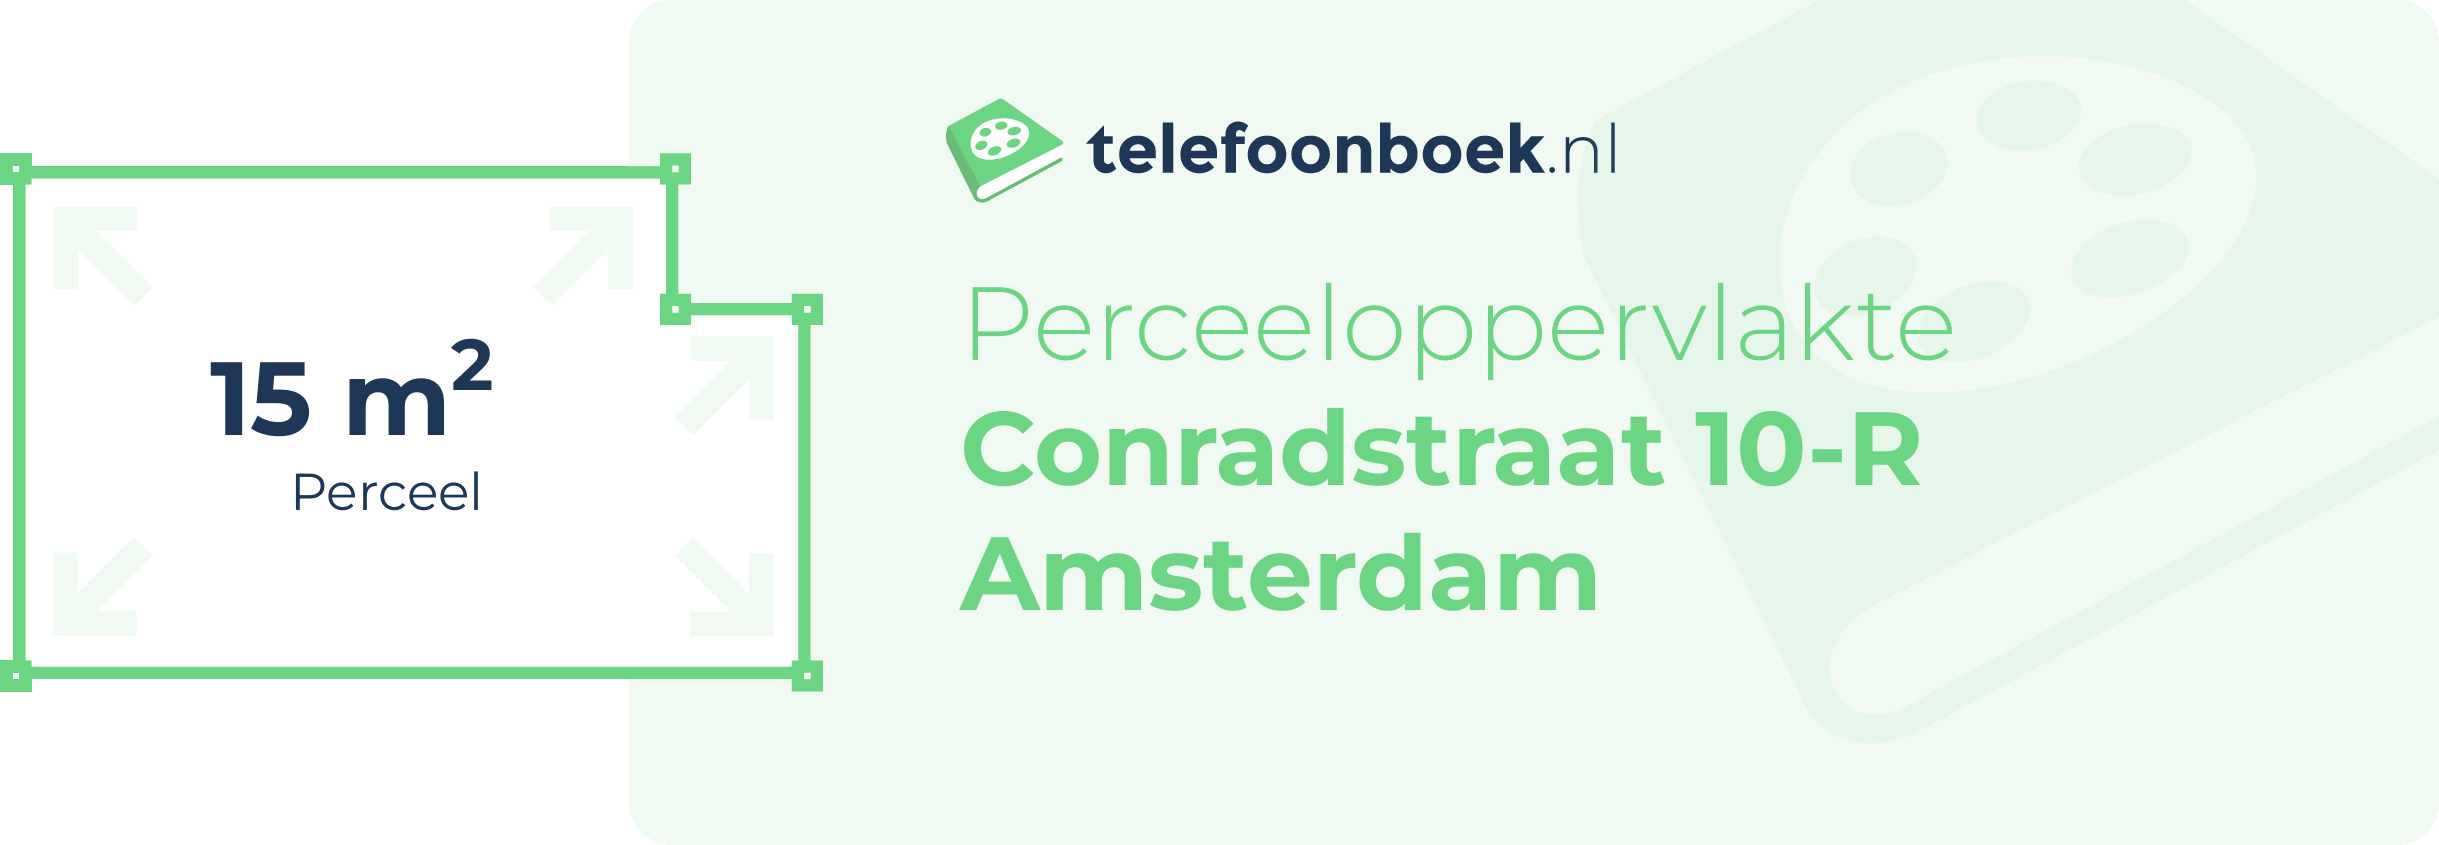 Perceeloppervlakte Conradstraat 10-R Amsterdam